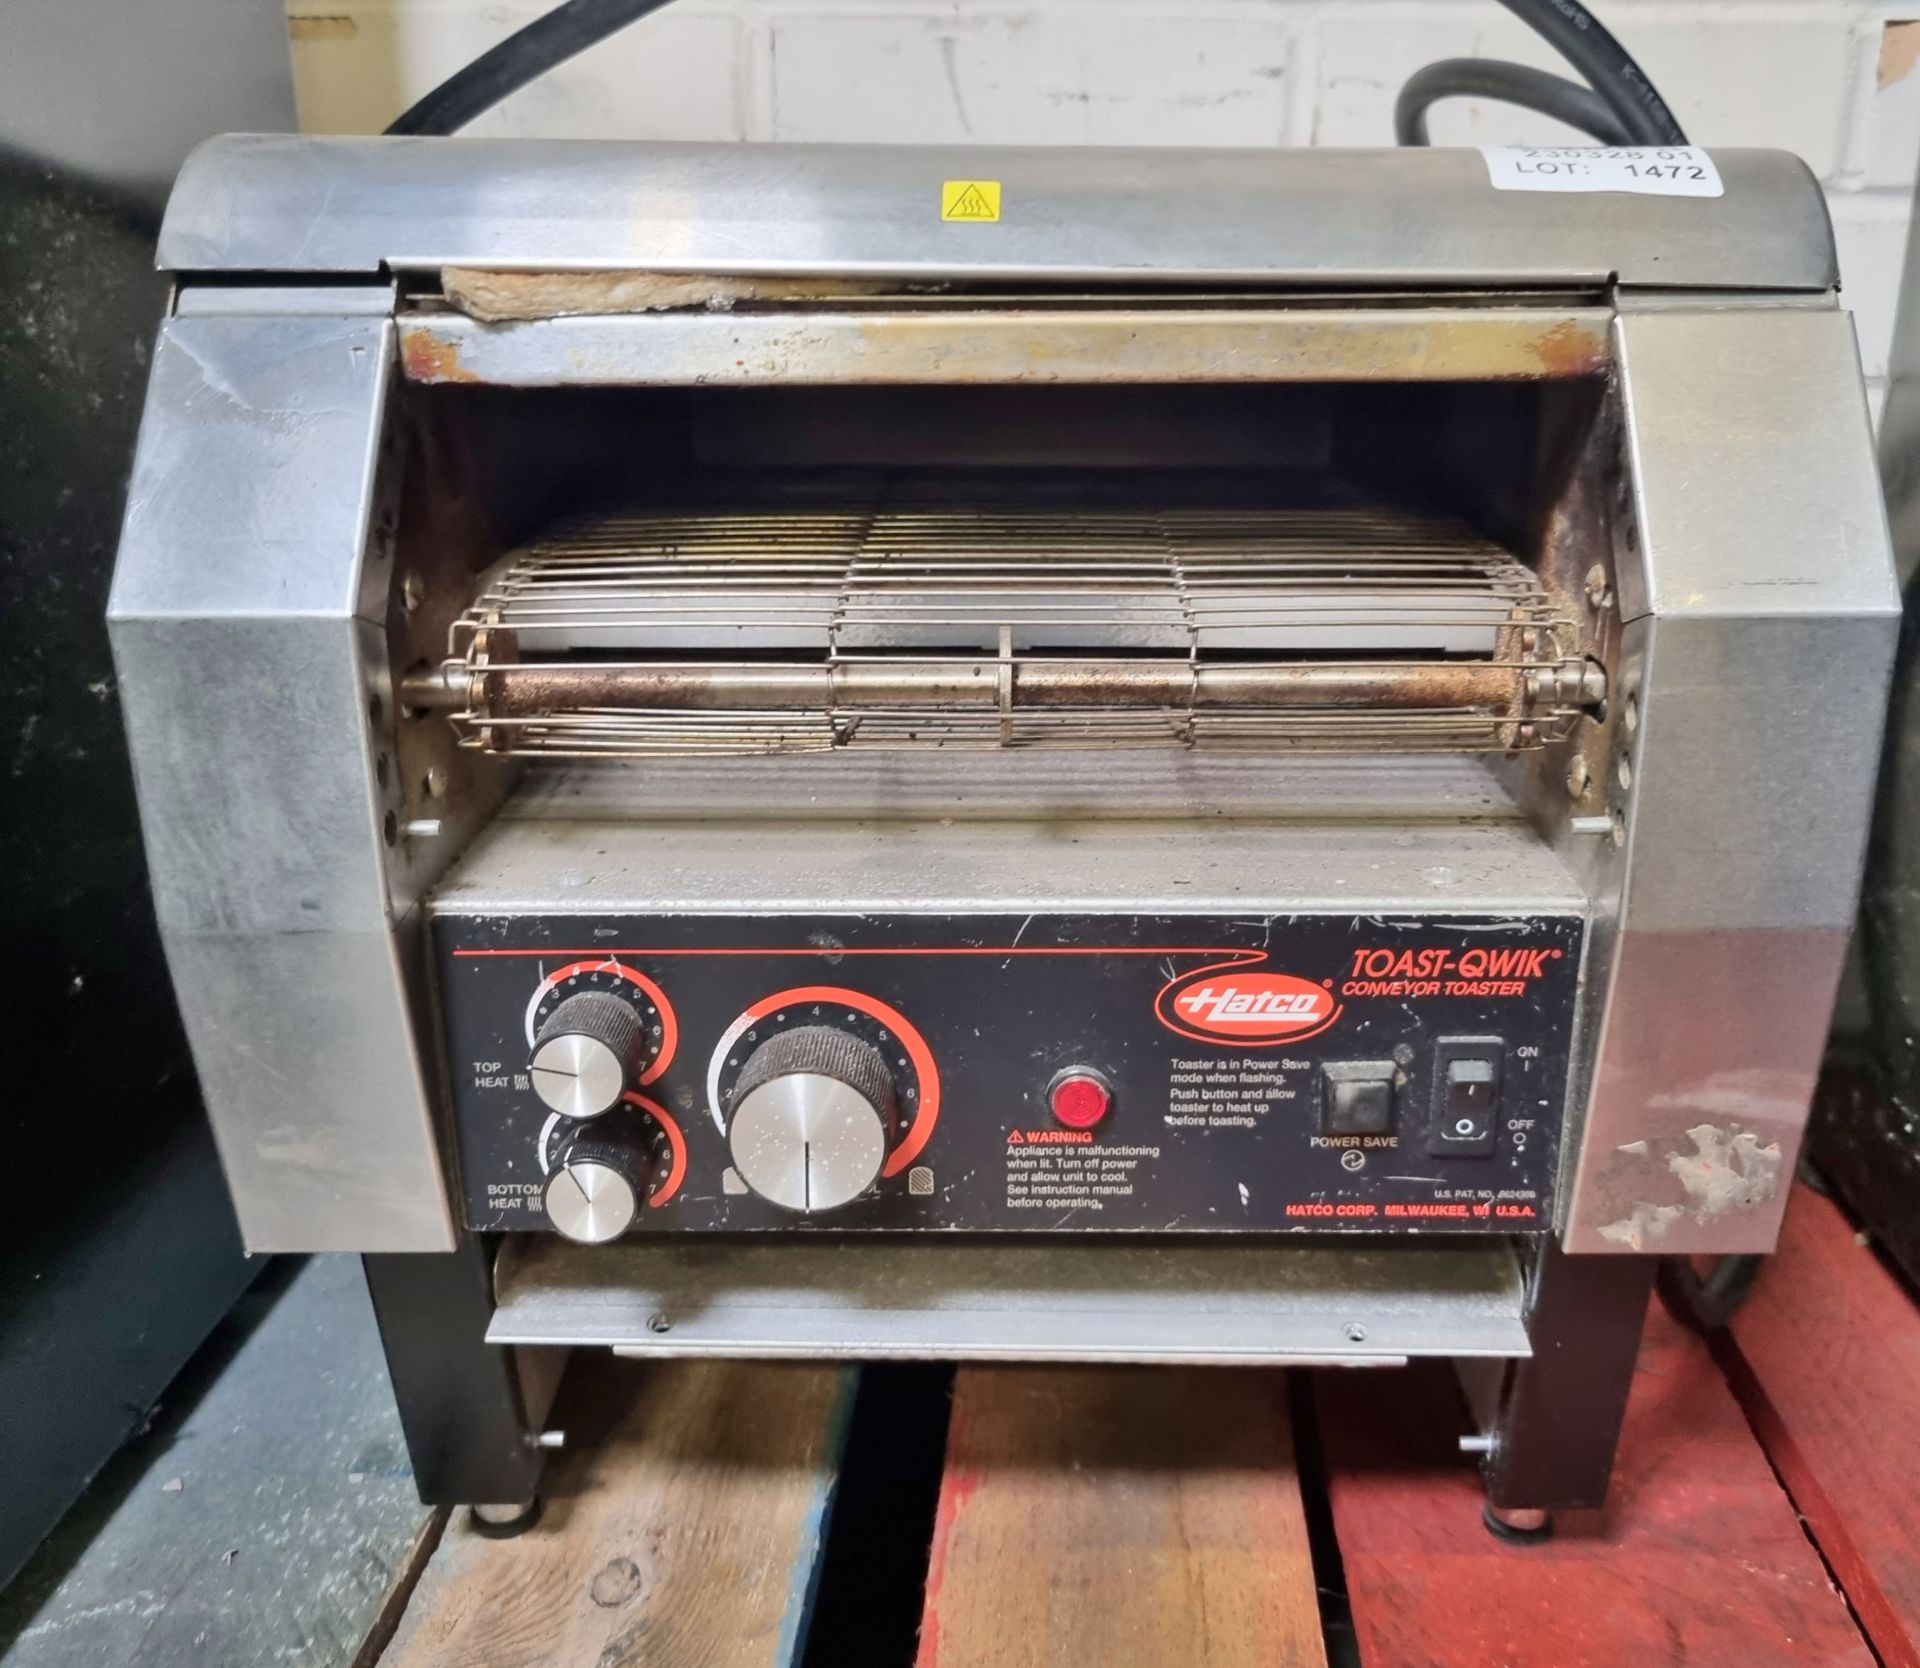 Hatco TQ-405 Toast-Qwik conveyor toaster - 370mm W - Image 3 of 4